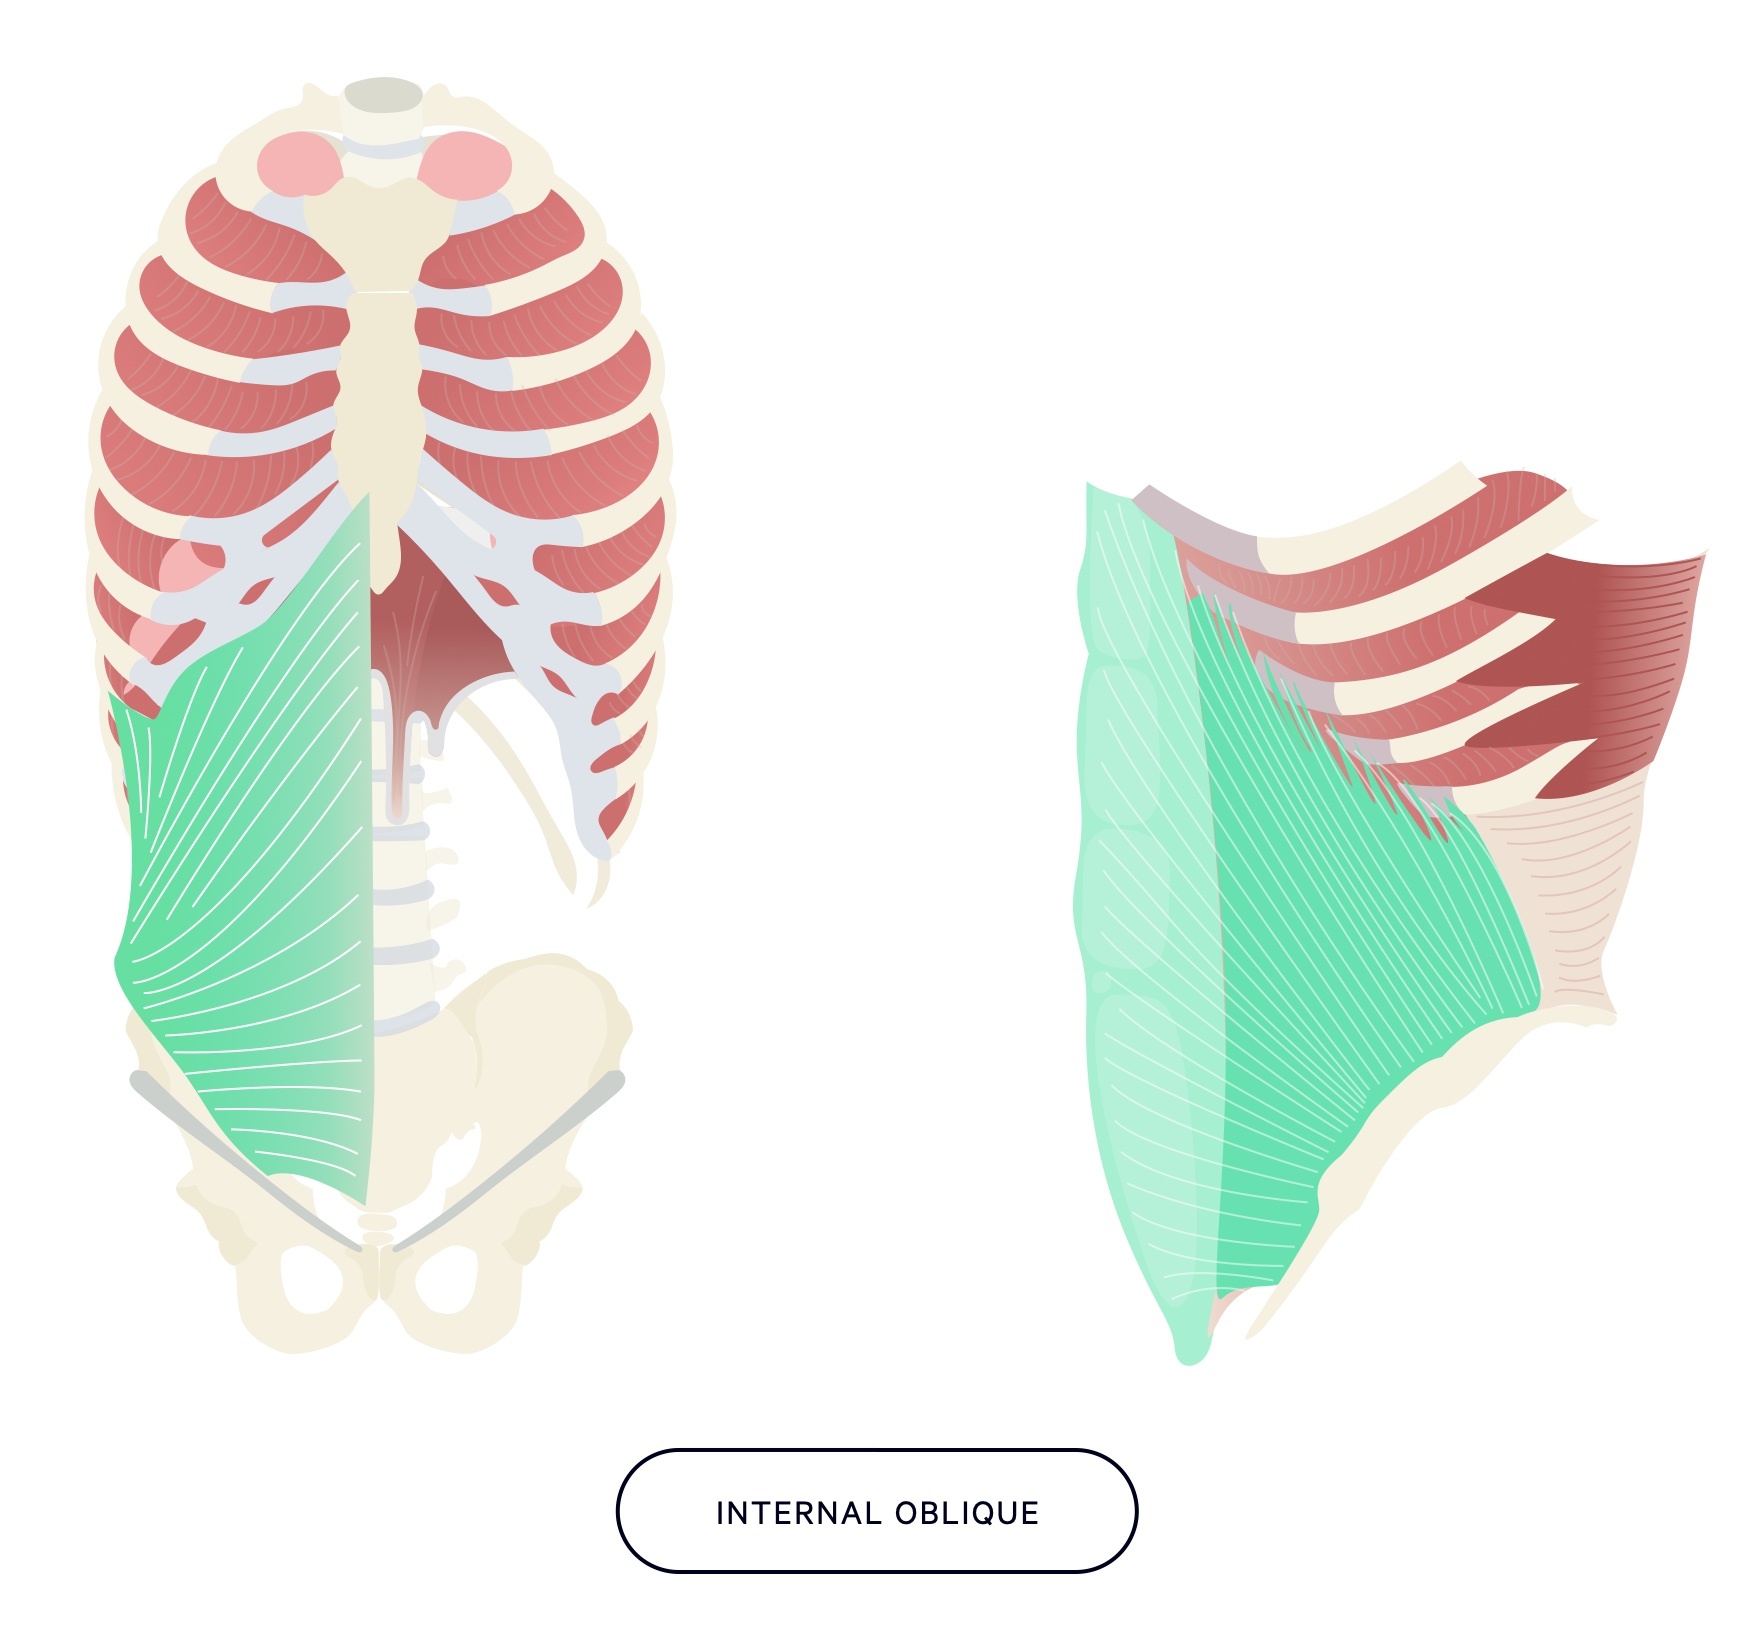 Internal oblique muscle